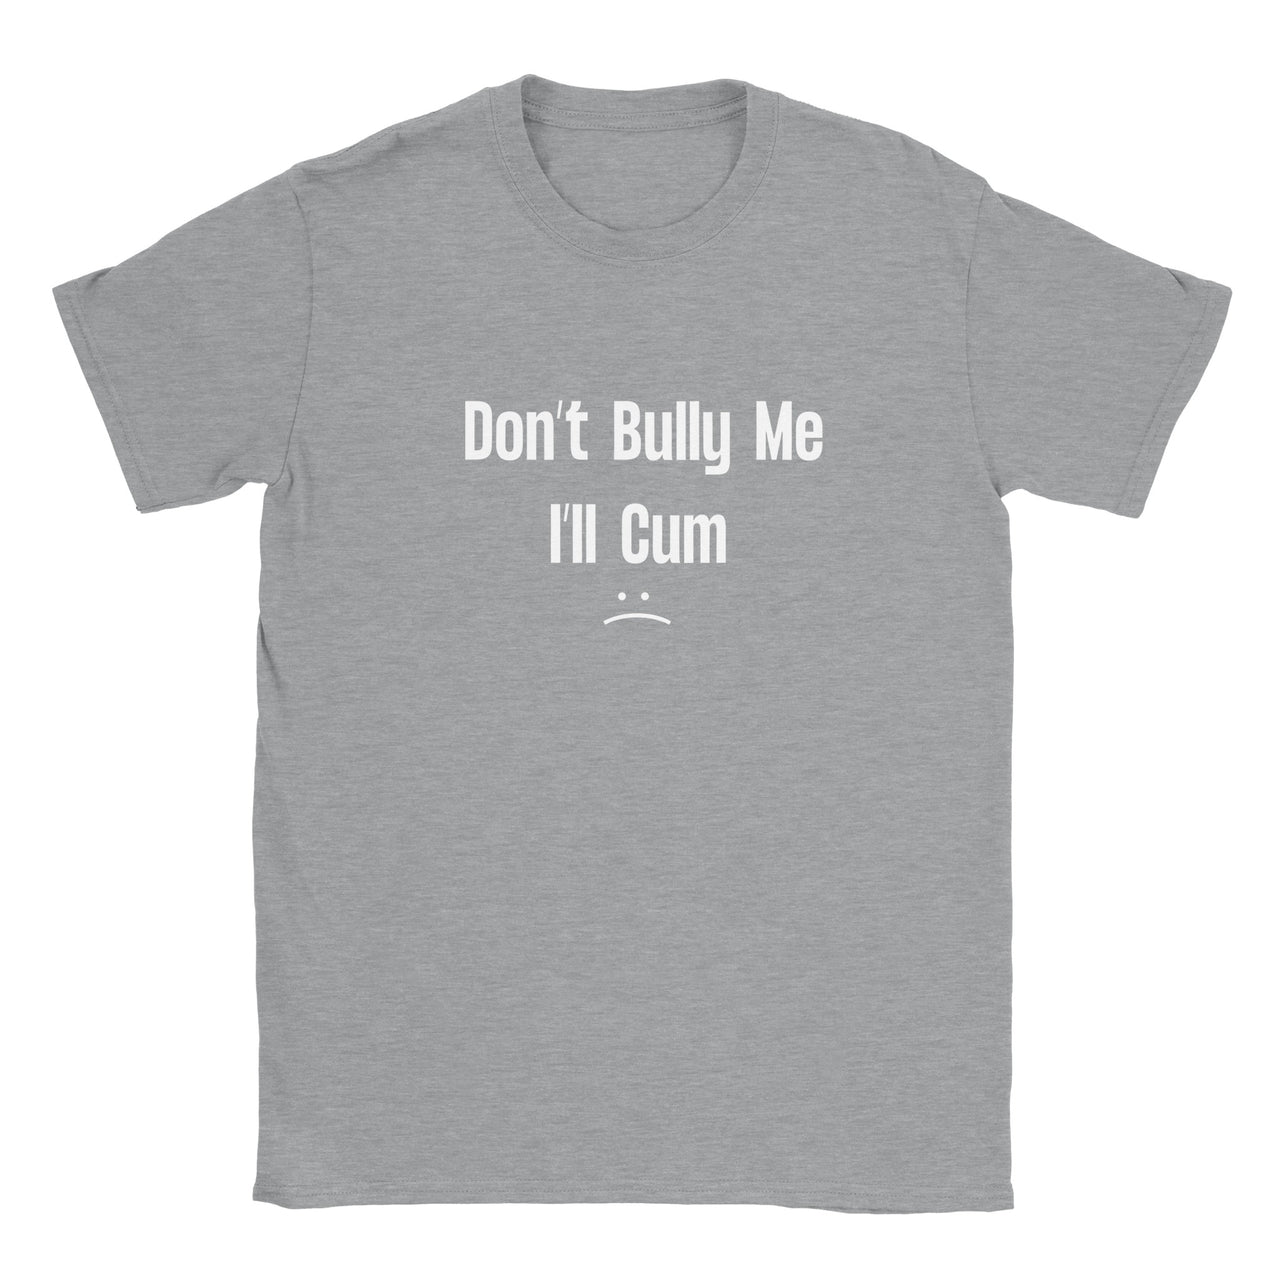 Don't Bully Me T-shirt